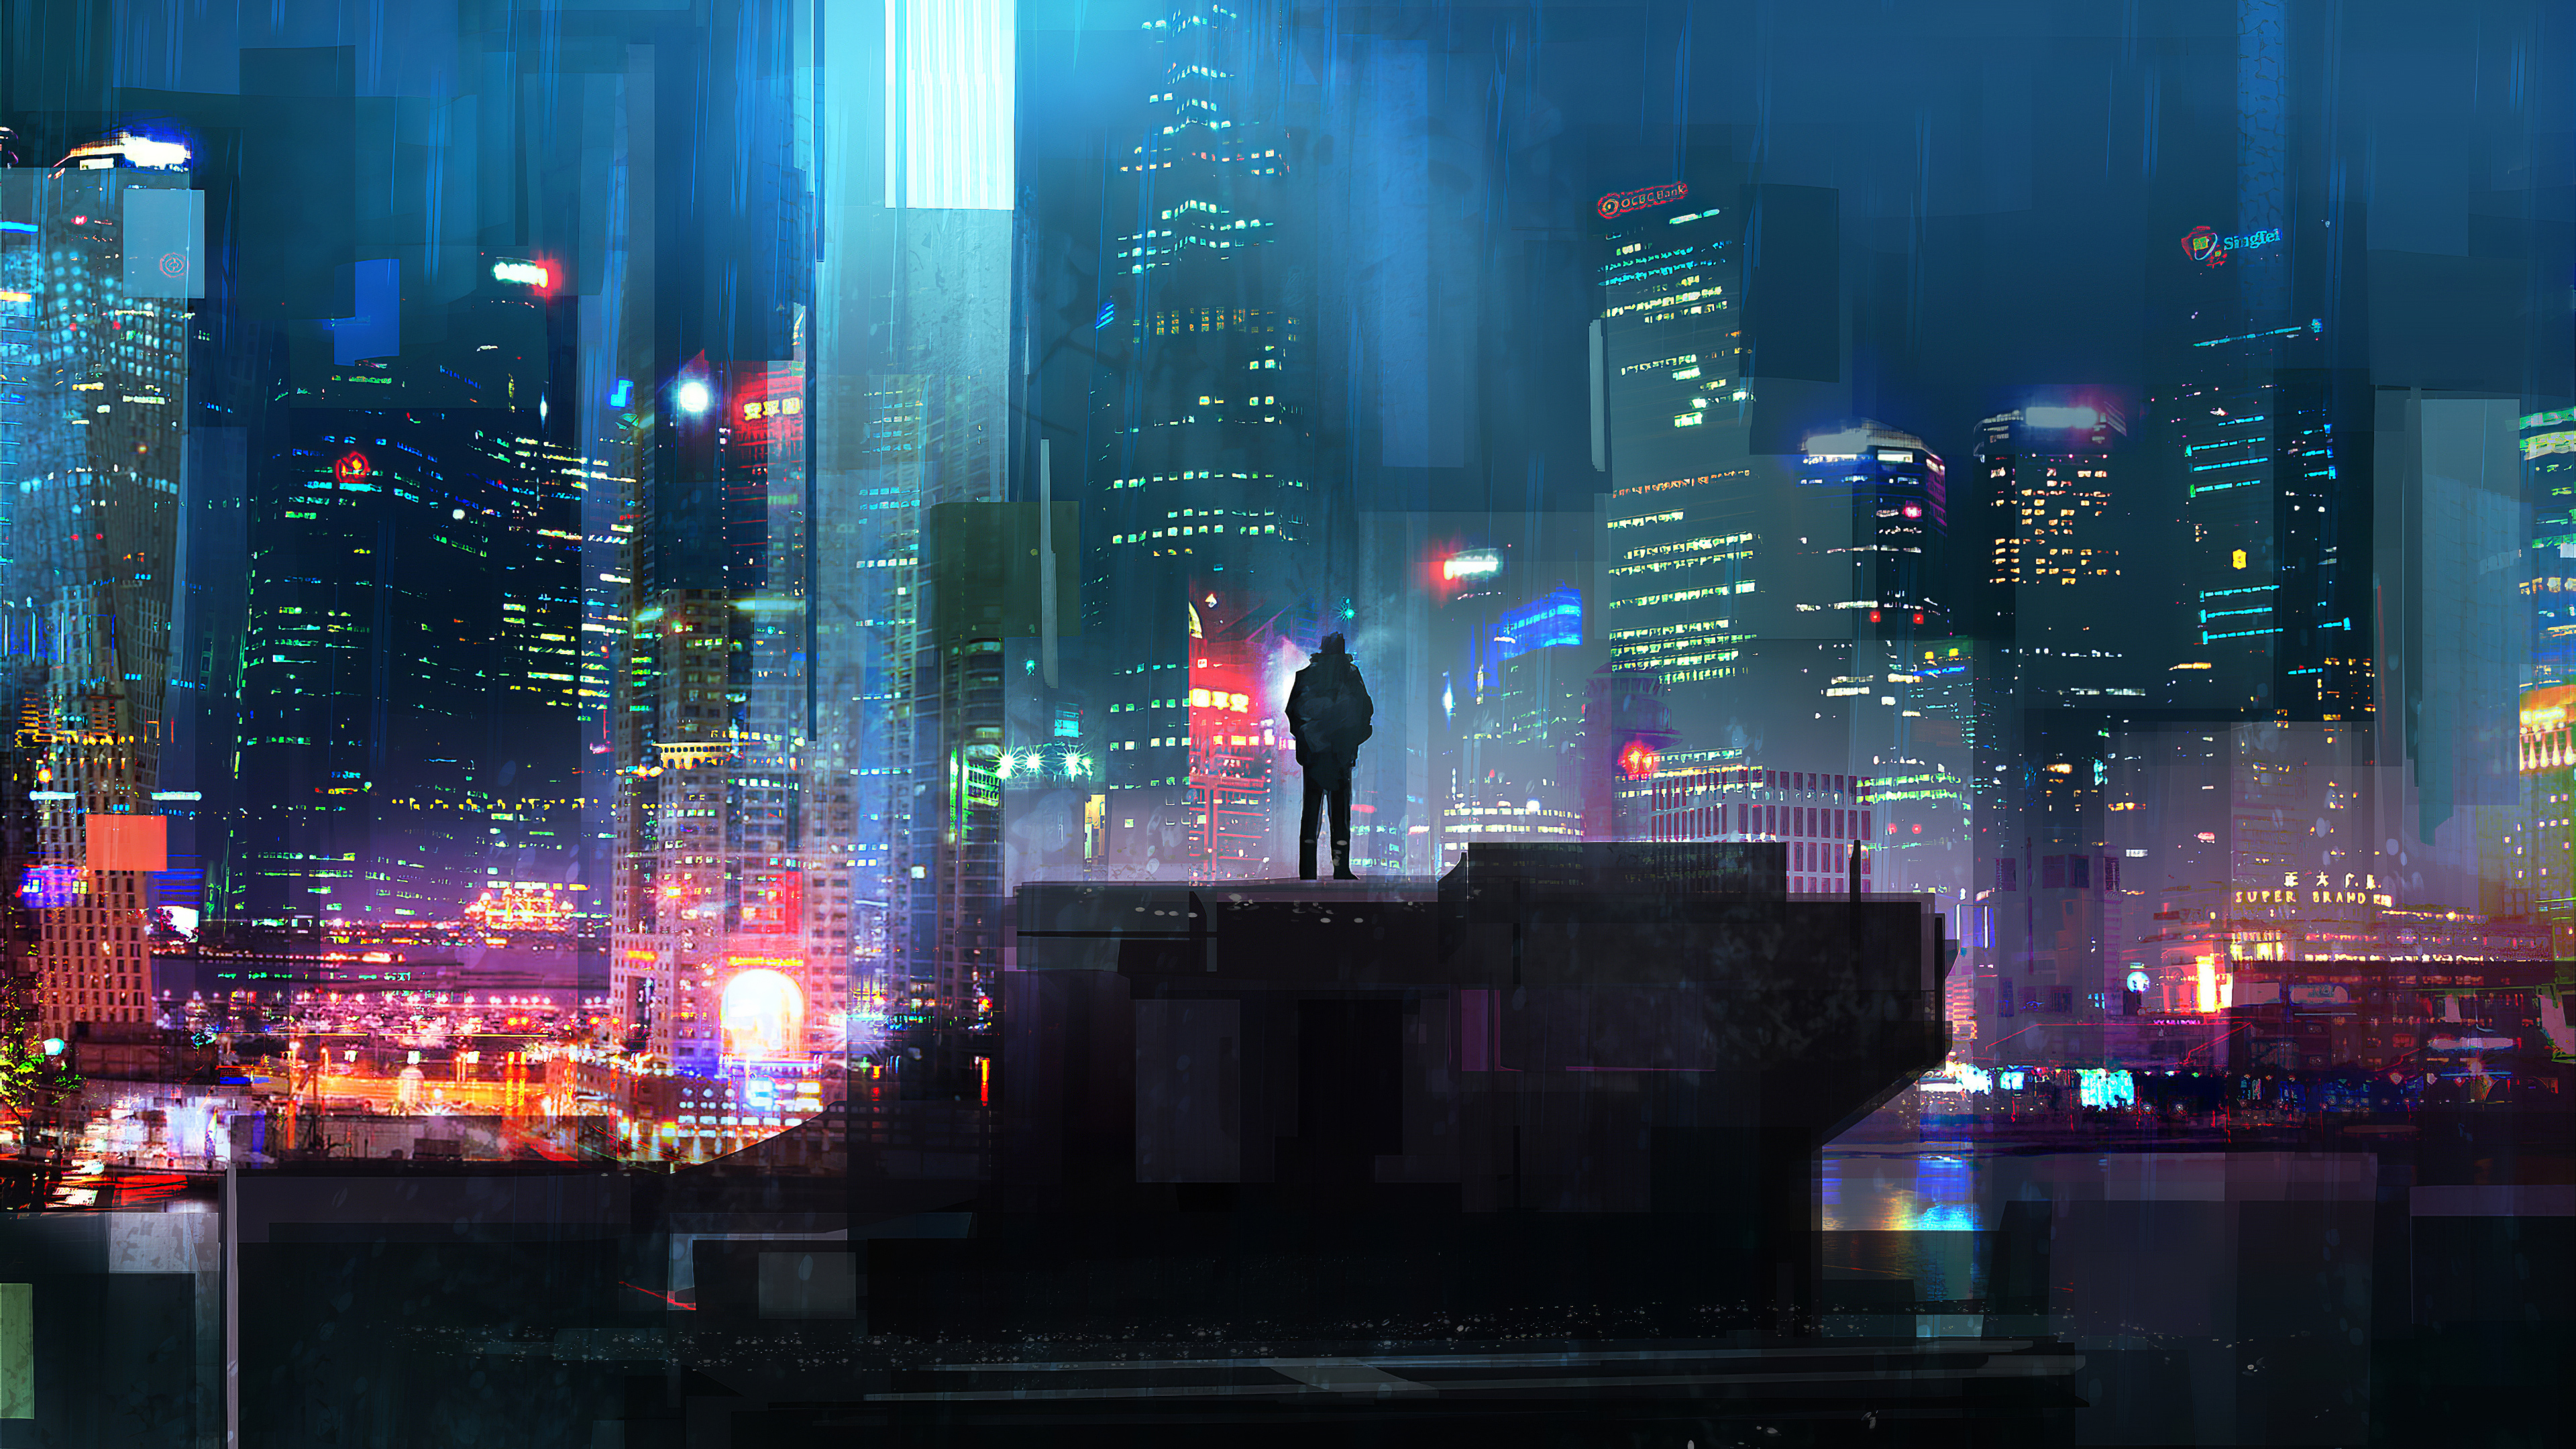 Cyberpunk 2077 City небоскребы